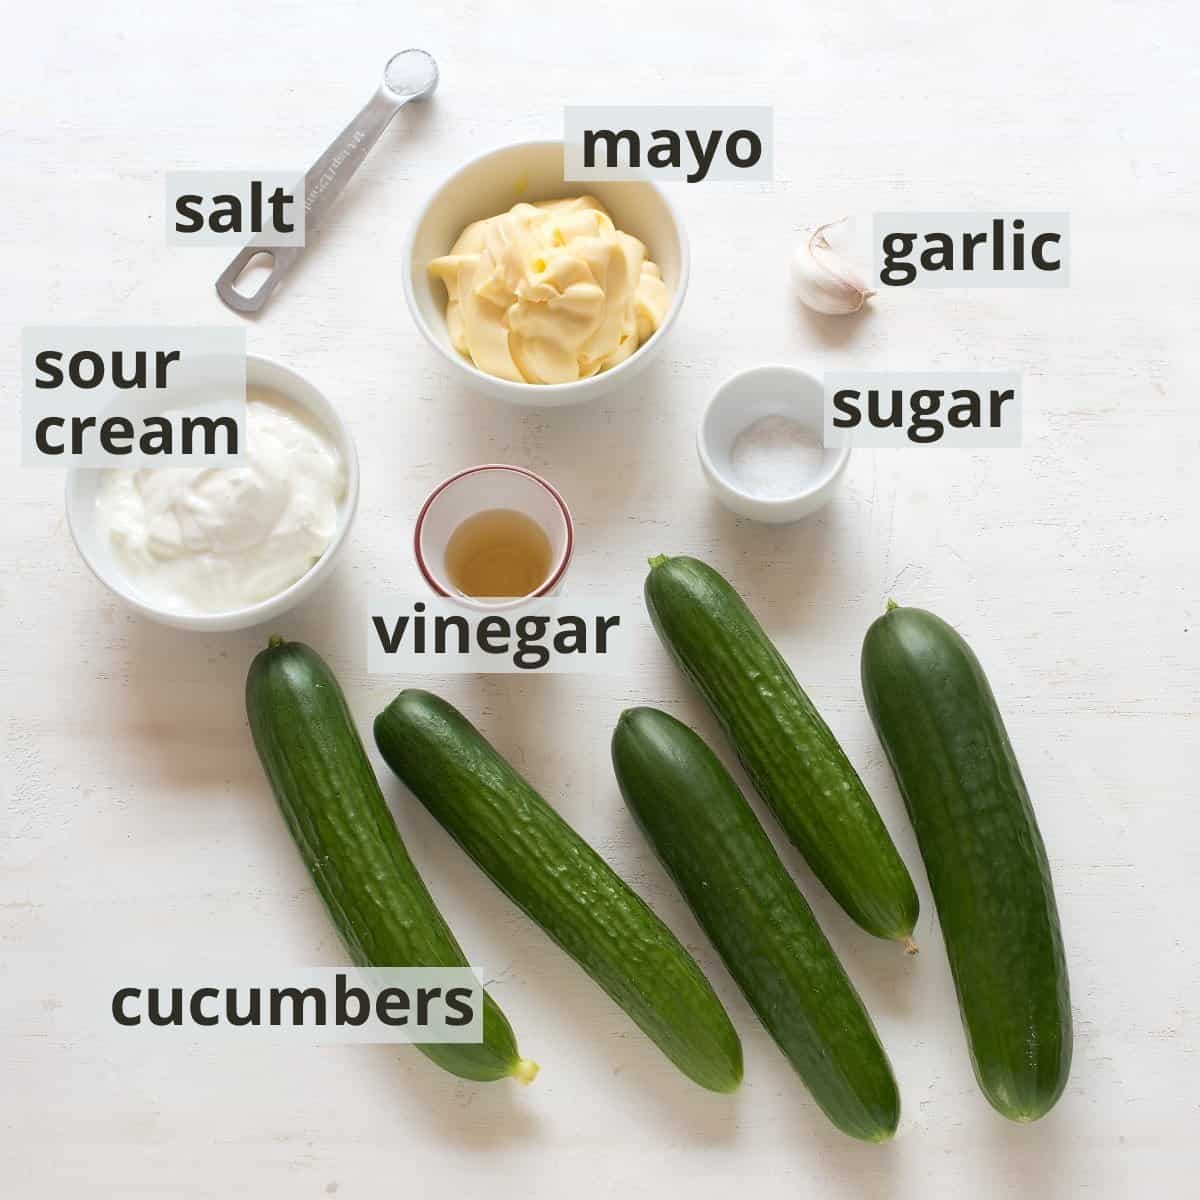 Creamy cucumber salad ingredients, inclusive captions.